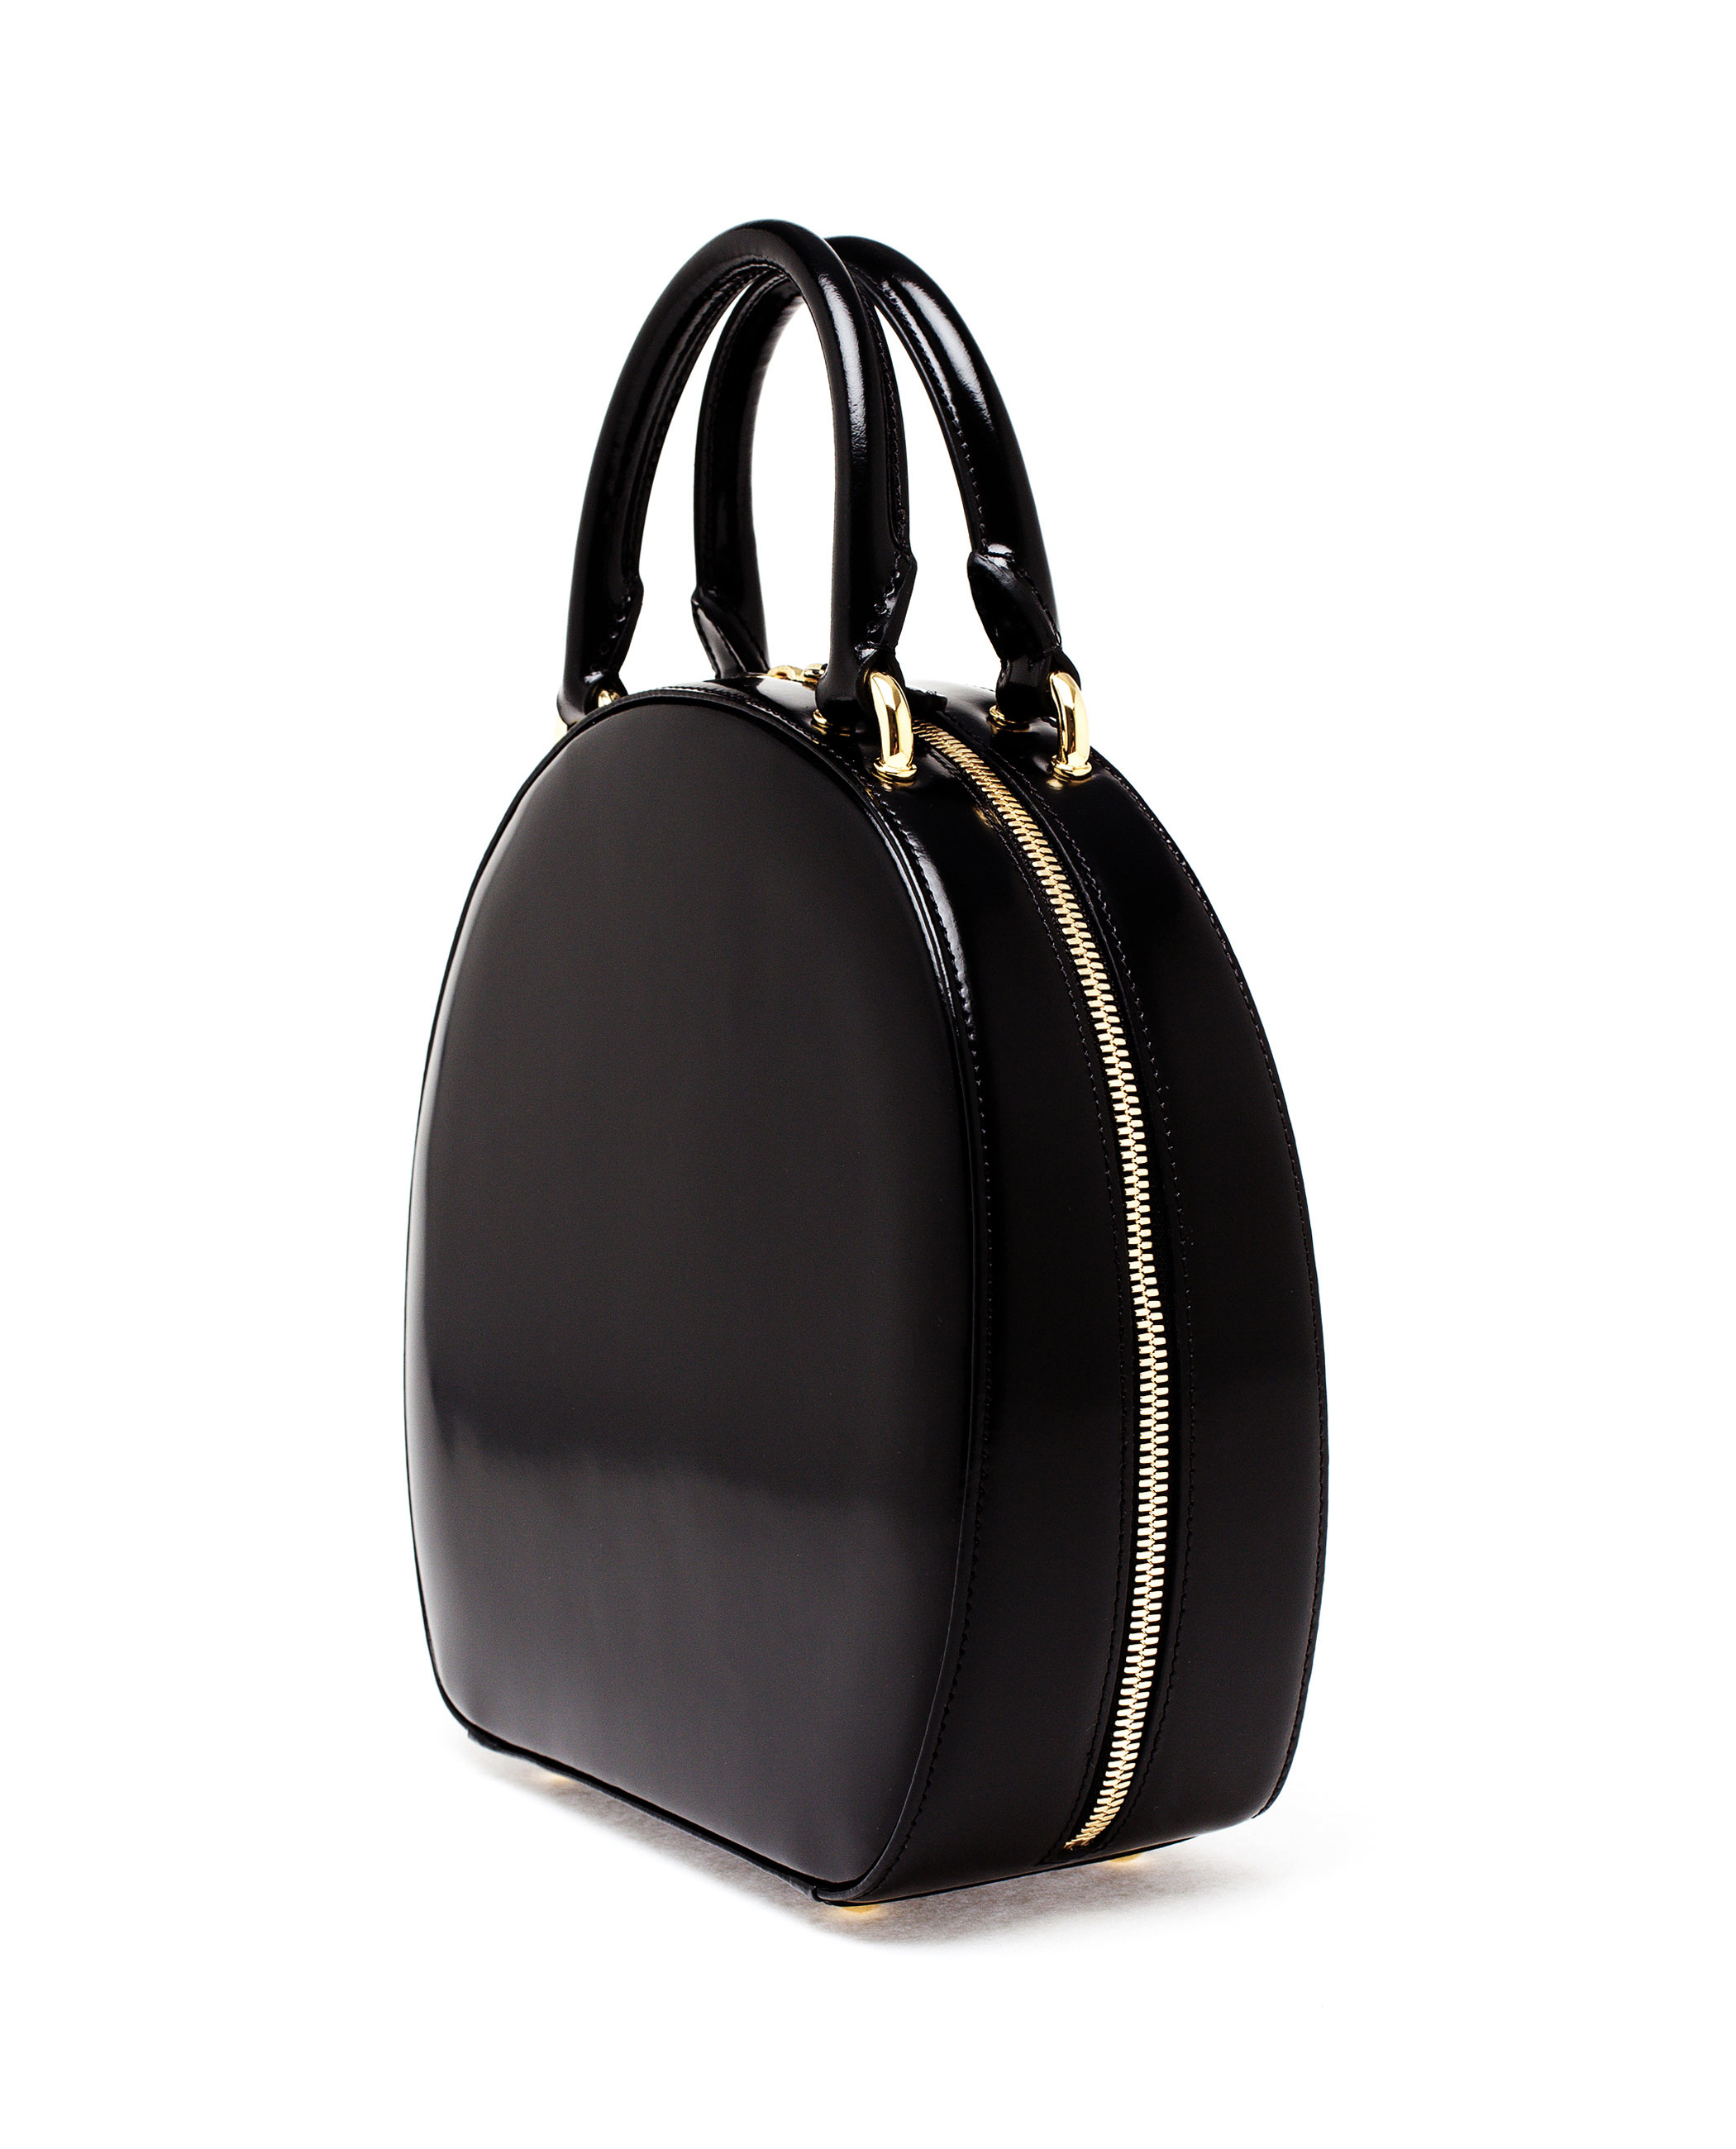 Simone rocha Leather Box Bag in Black | Lyst